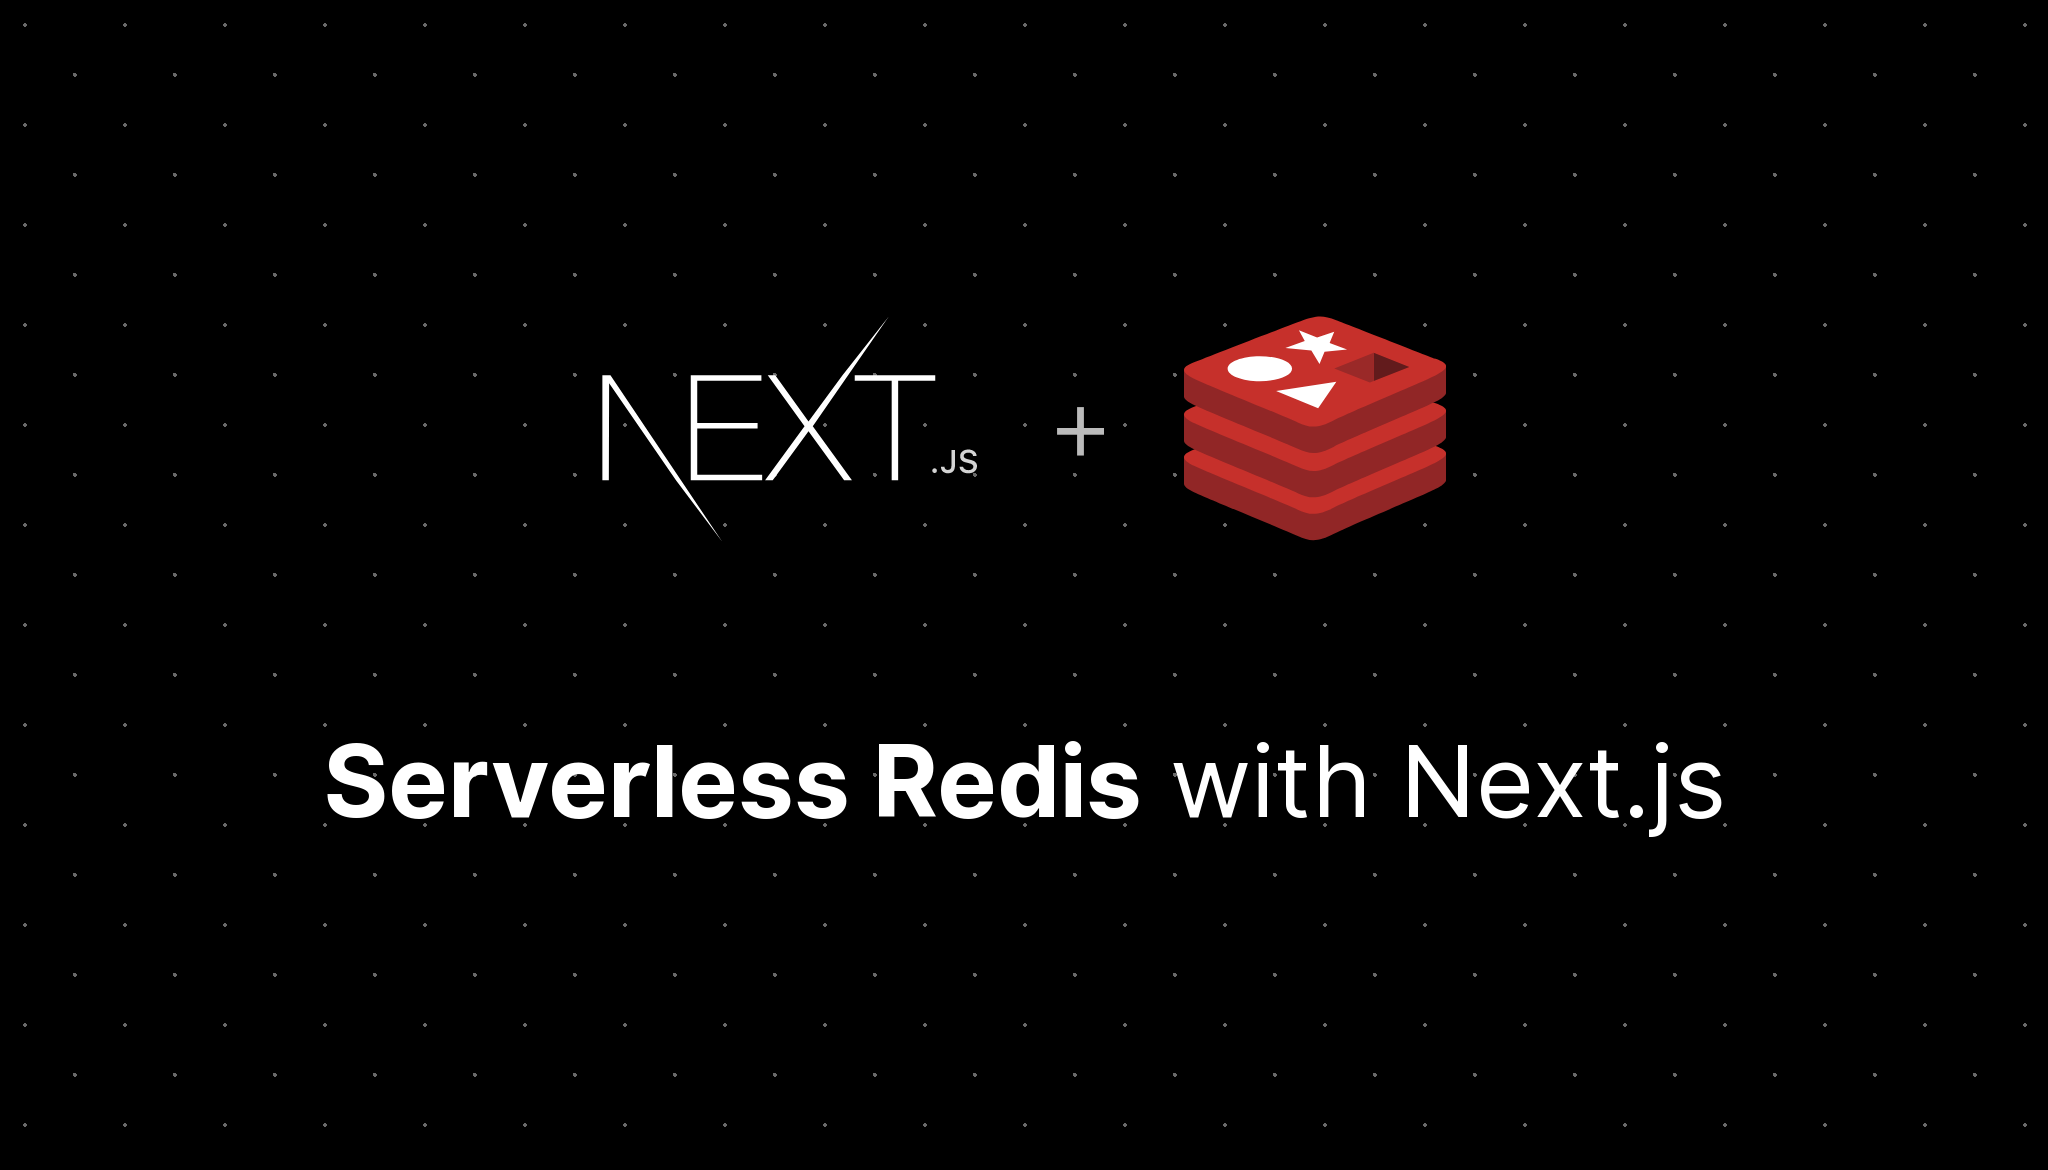 Using Serverless Redis with Next.js